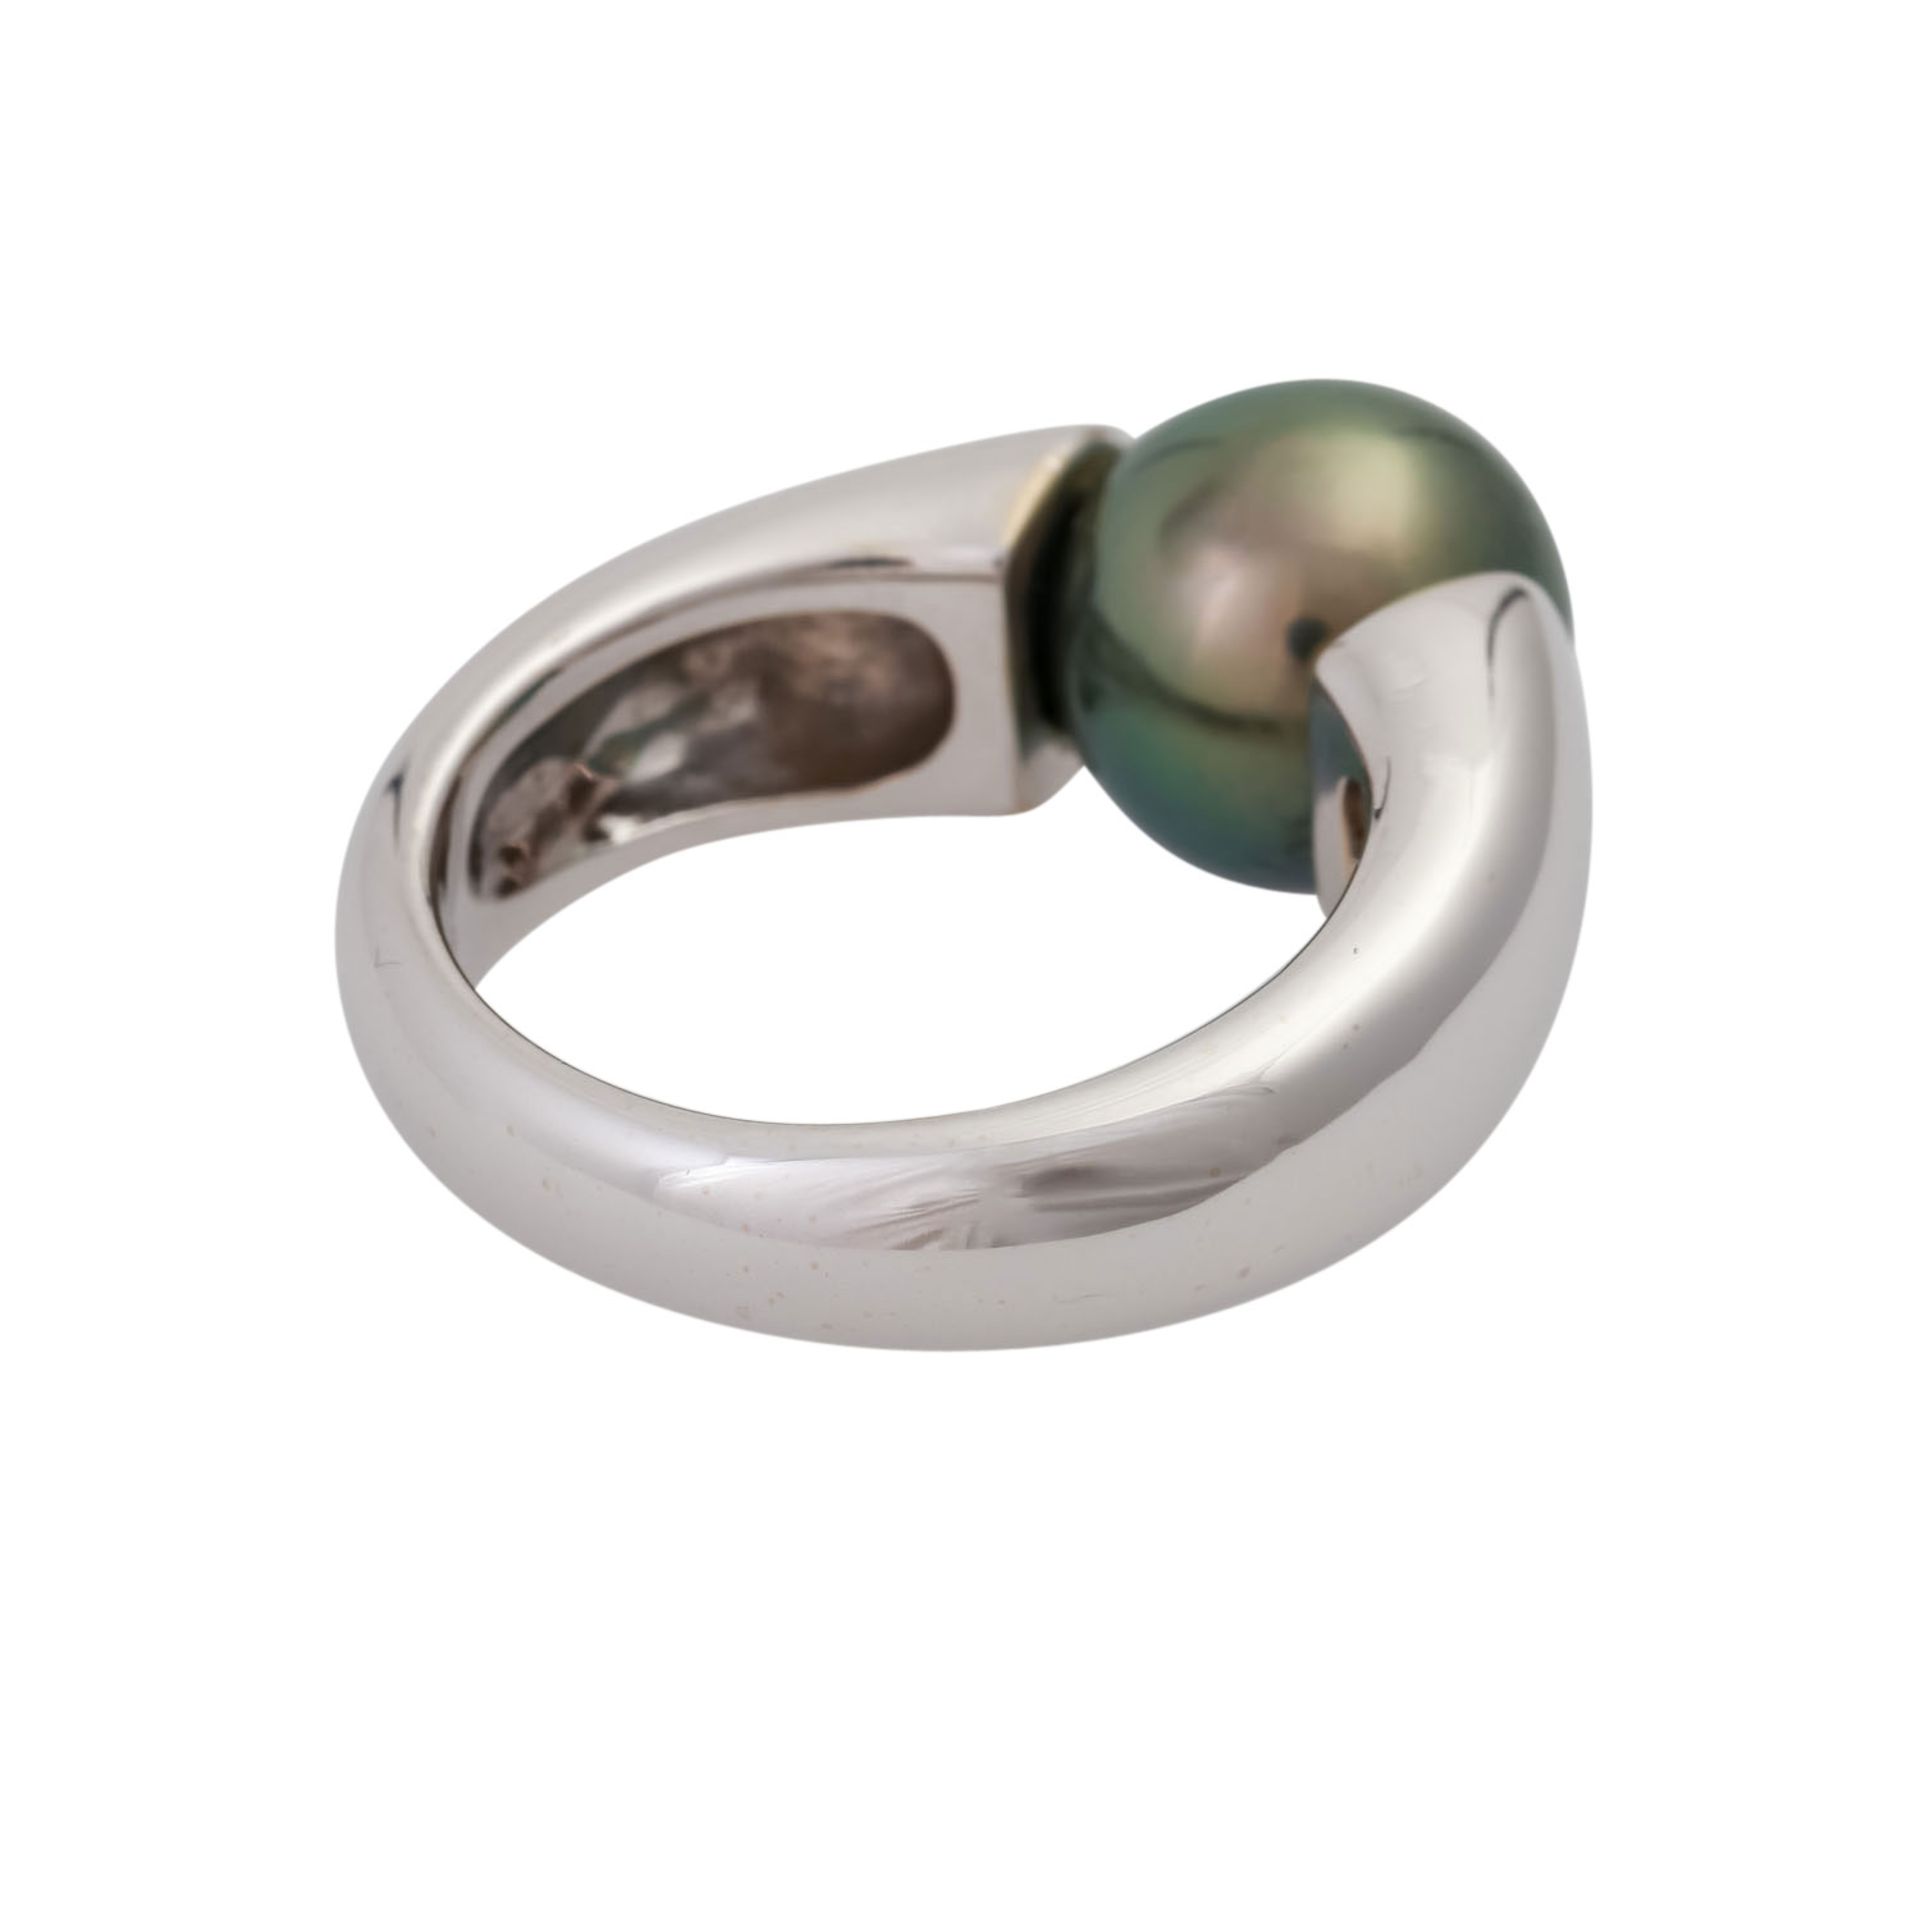 Ring mit Tahiti Zuchtperle, ca. 11 mm, grau-grünmit rosa Oberton, schöner Lüster, WG 14K, RW 57, - Image 3 of 4